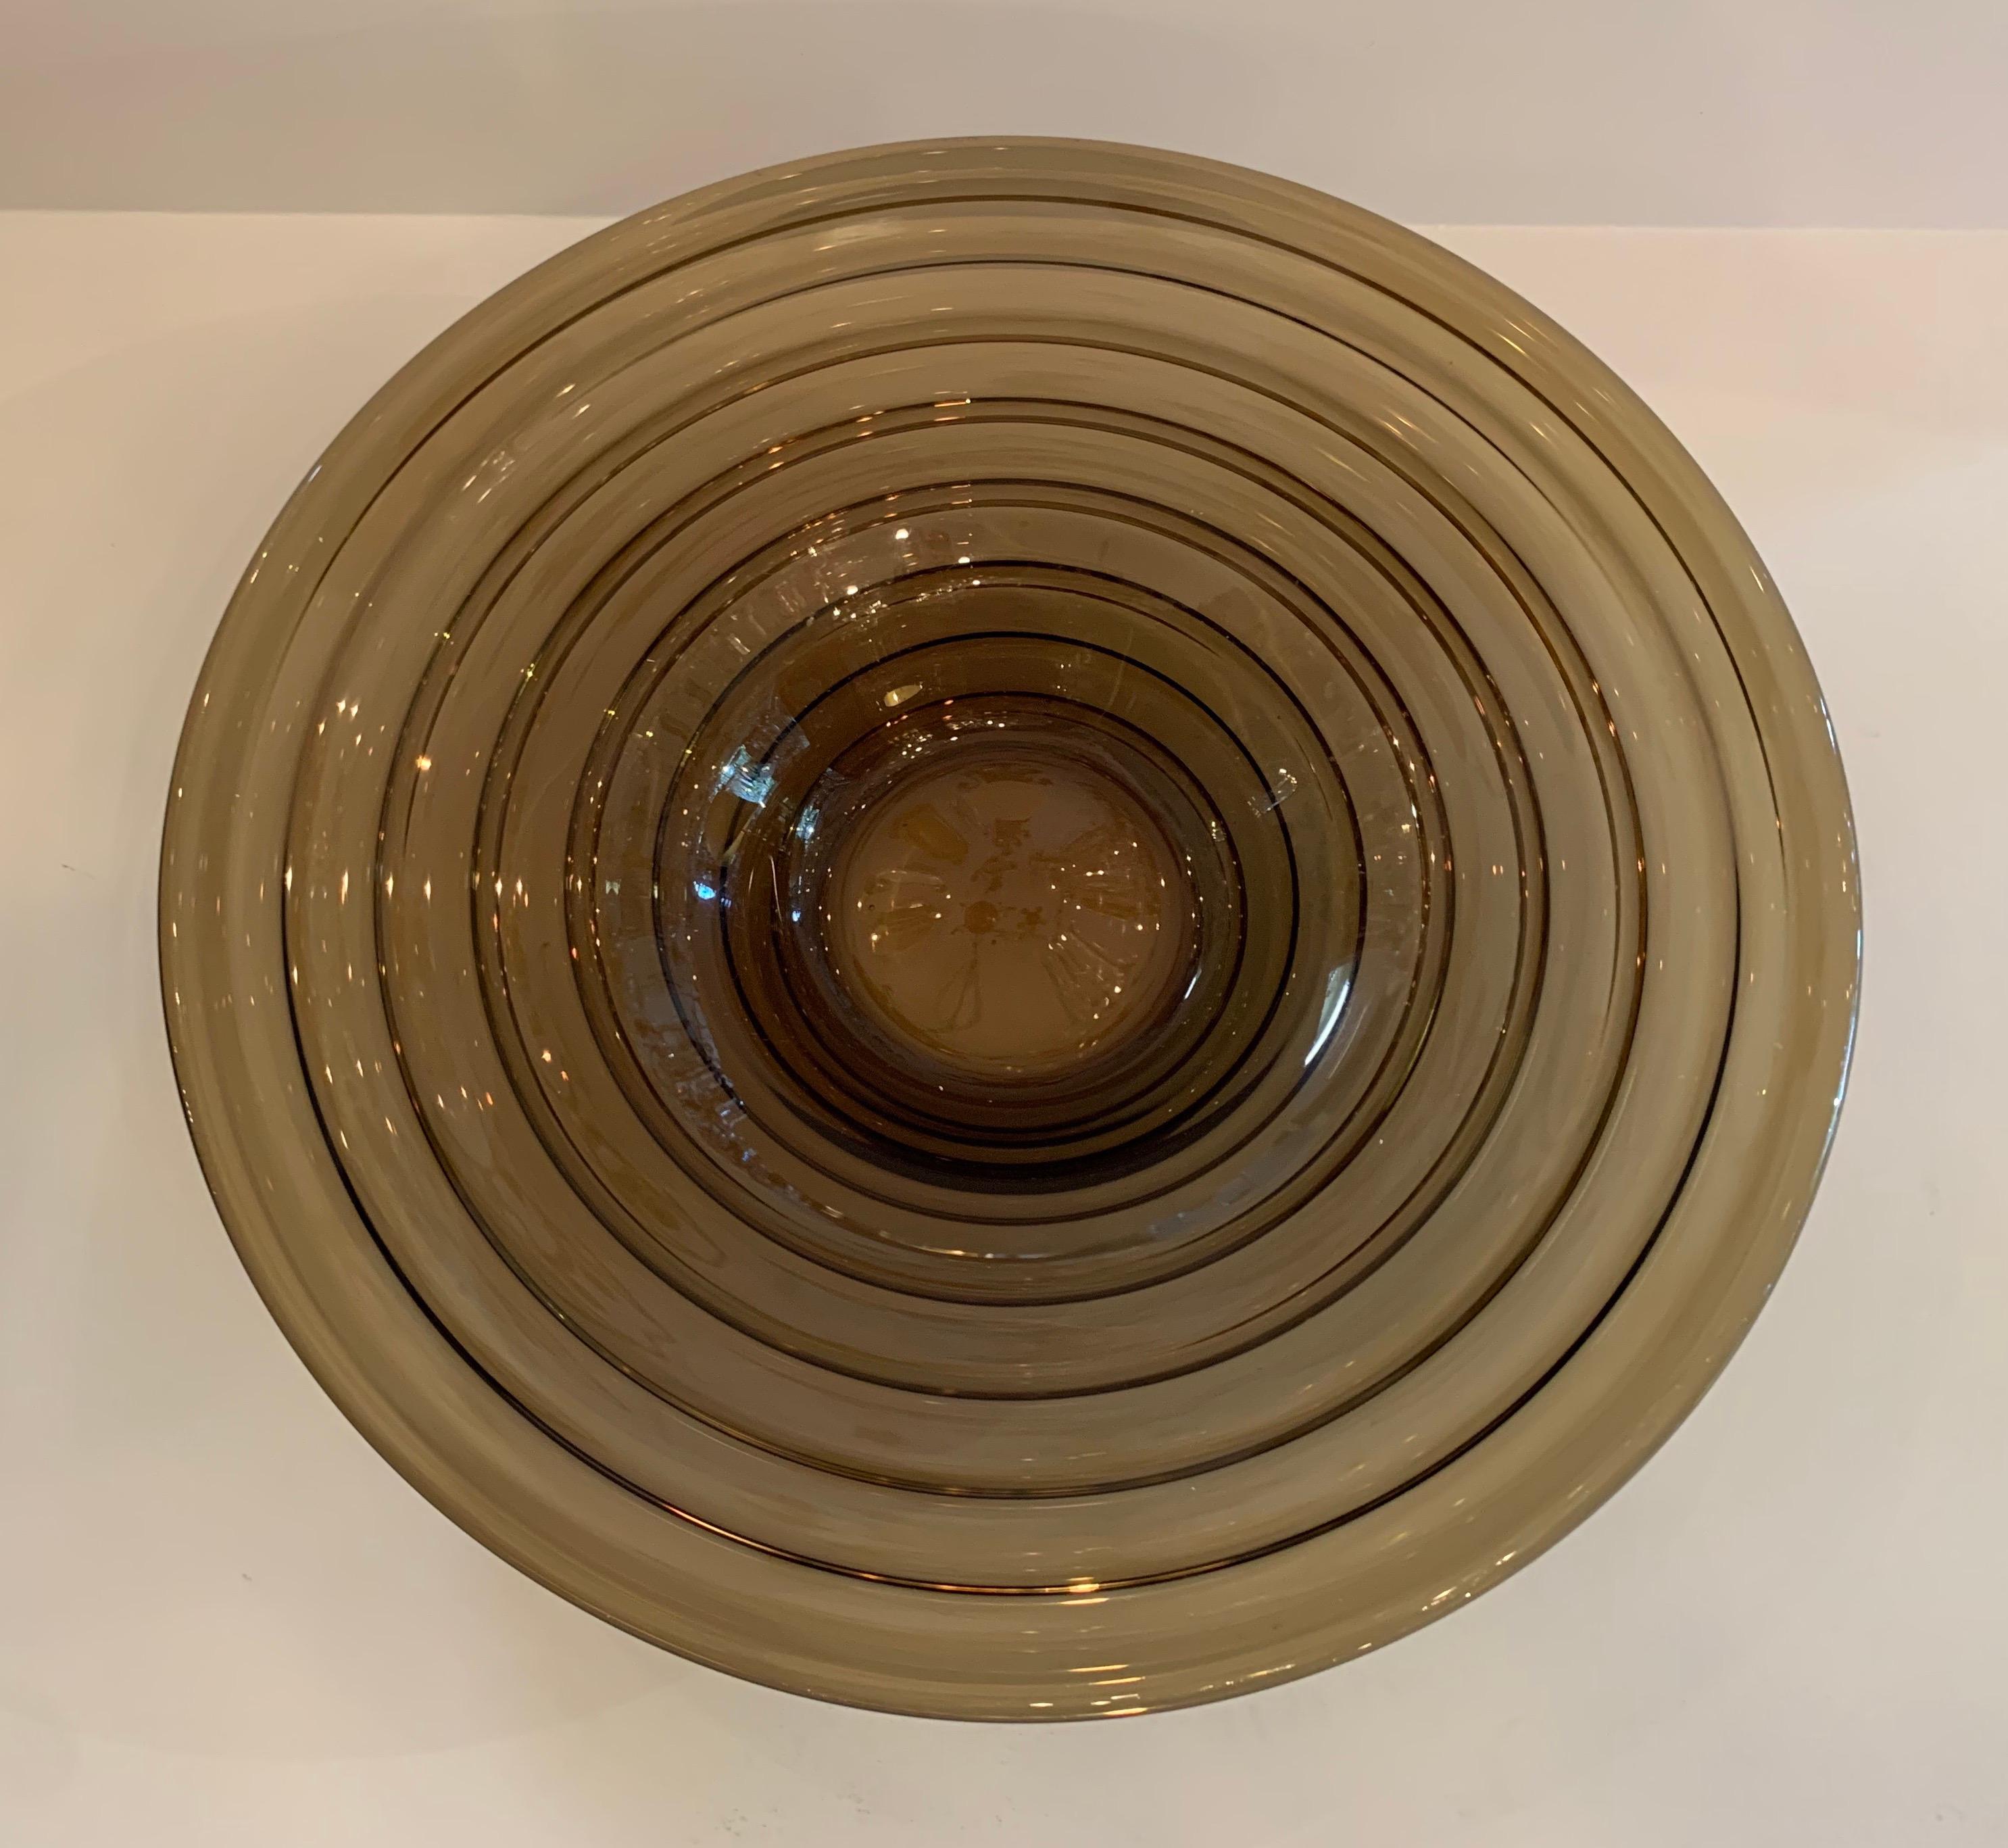 A wonderful Mid-Century Modern signed Daum Nancy France Art Deco smoke grey art glass centerpiece bowl with croix de lorraine
Approx. dimensions: 3